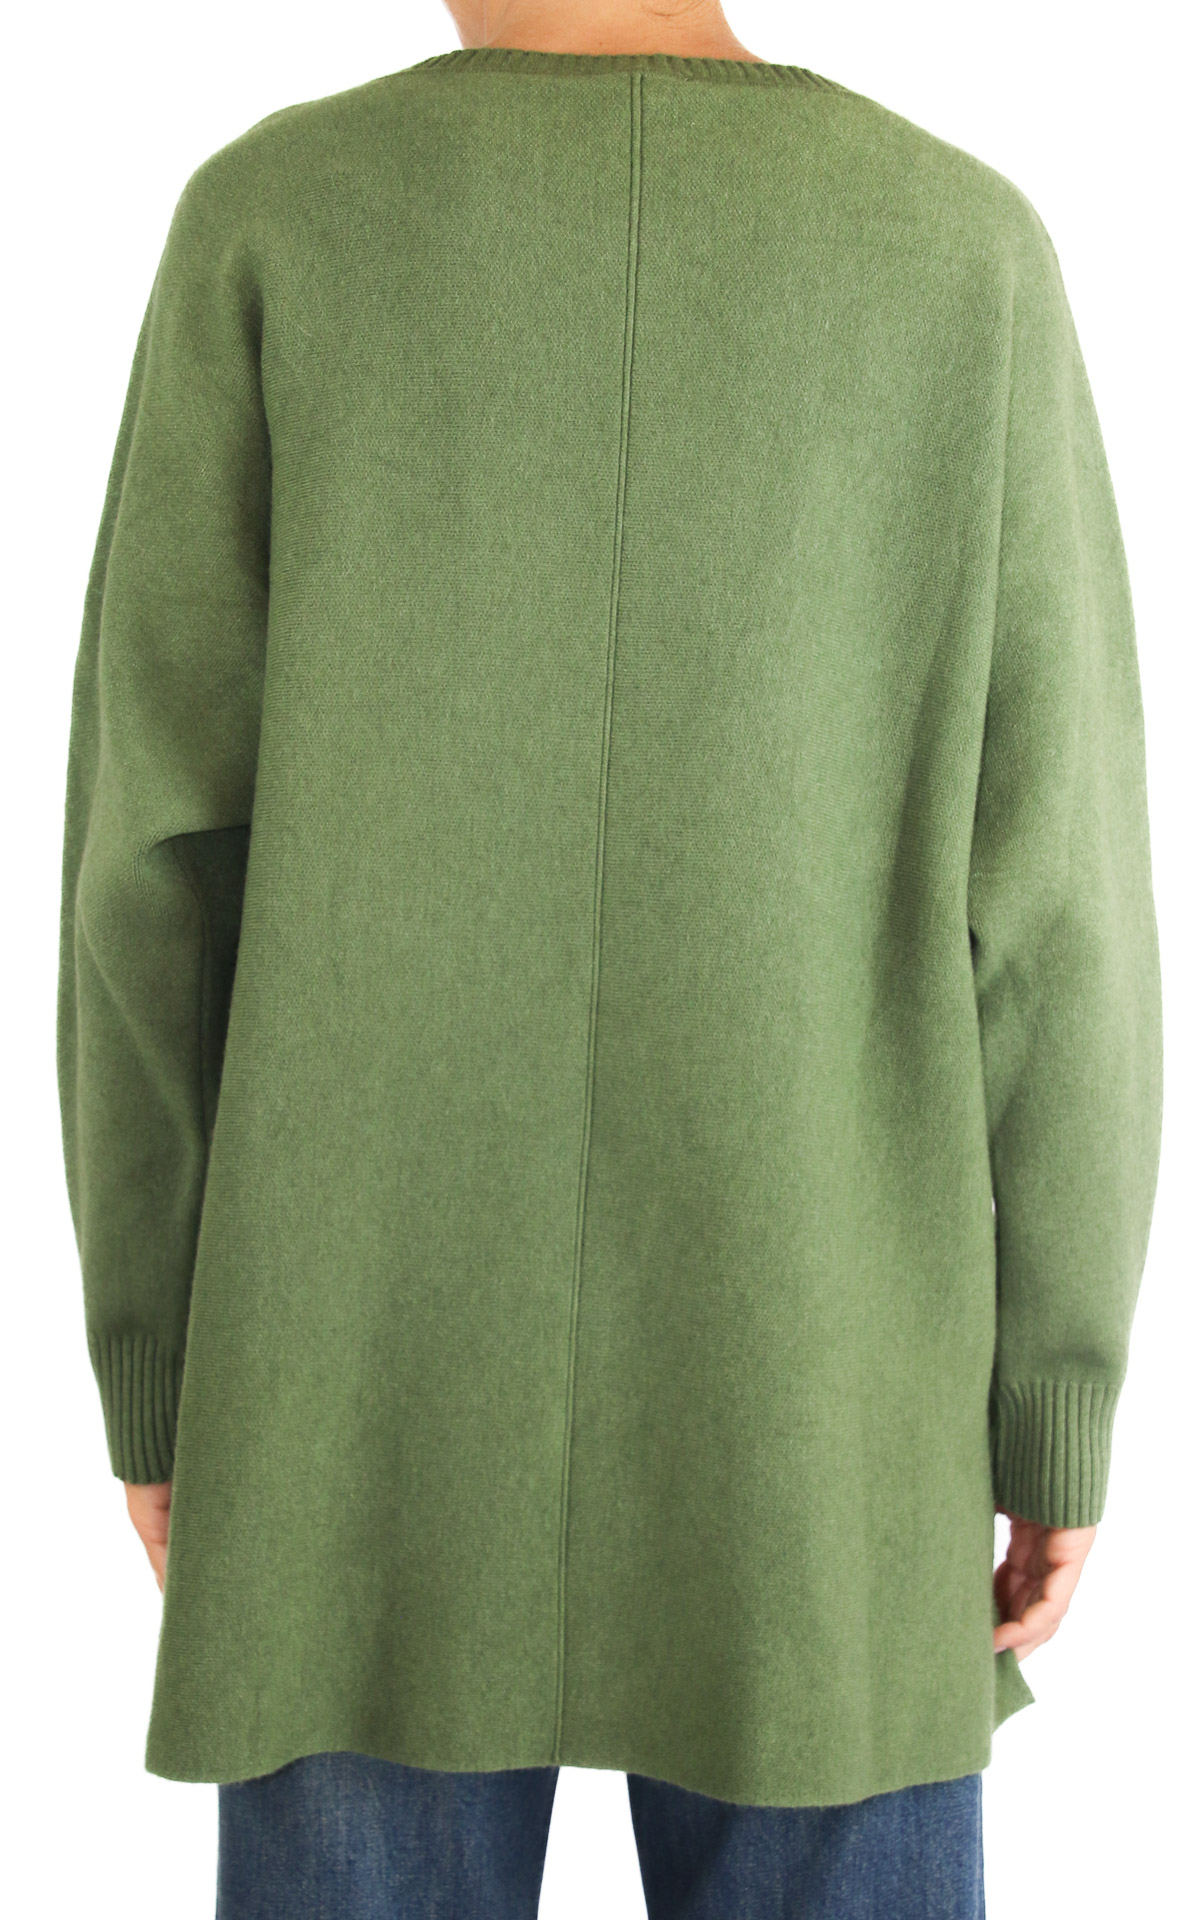 Initial - maglia frange - verde militare